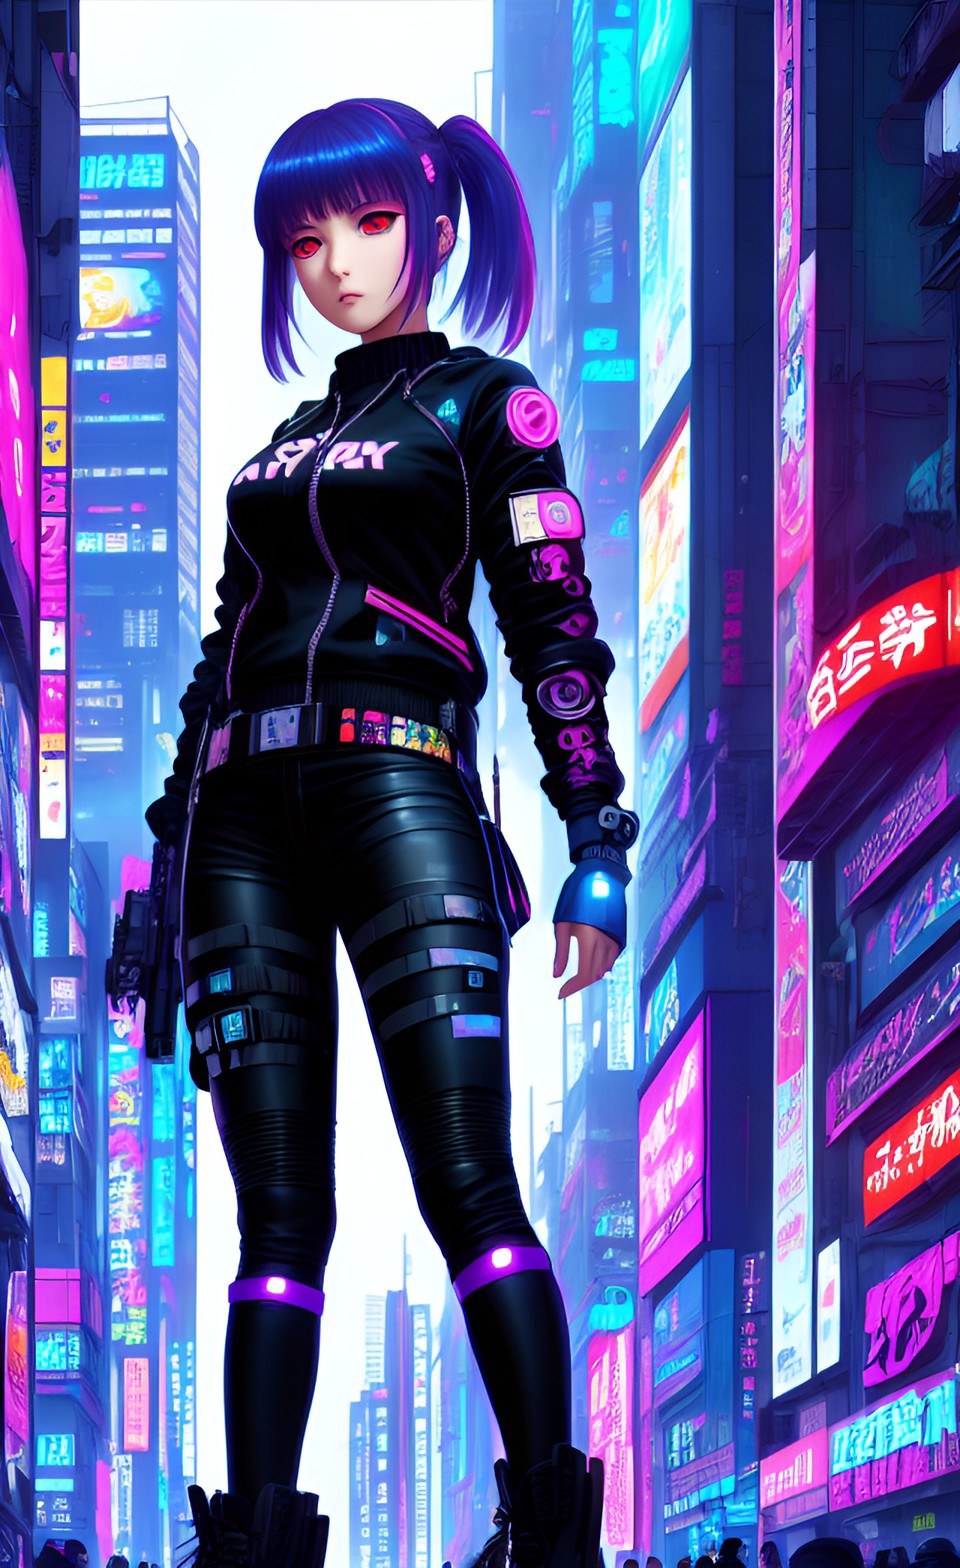 Cyberpunk Anime Girl by MAXADIN on DeviantArt